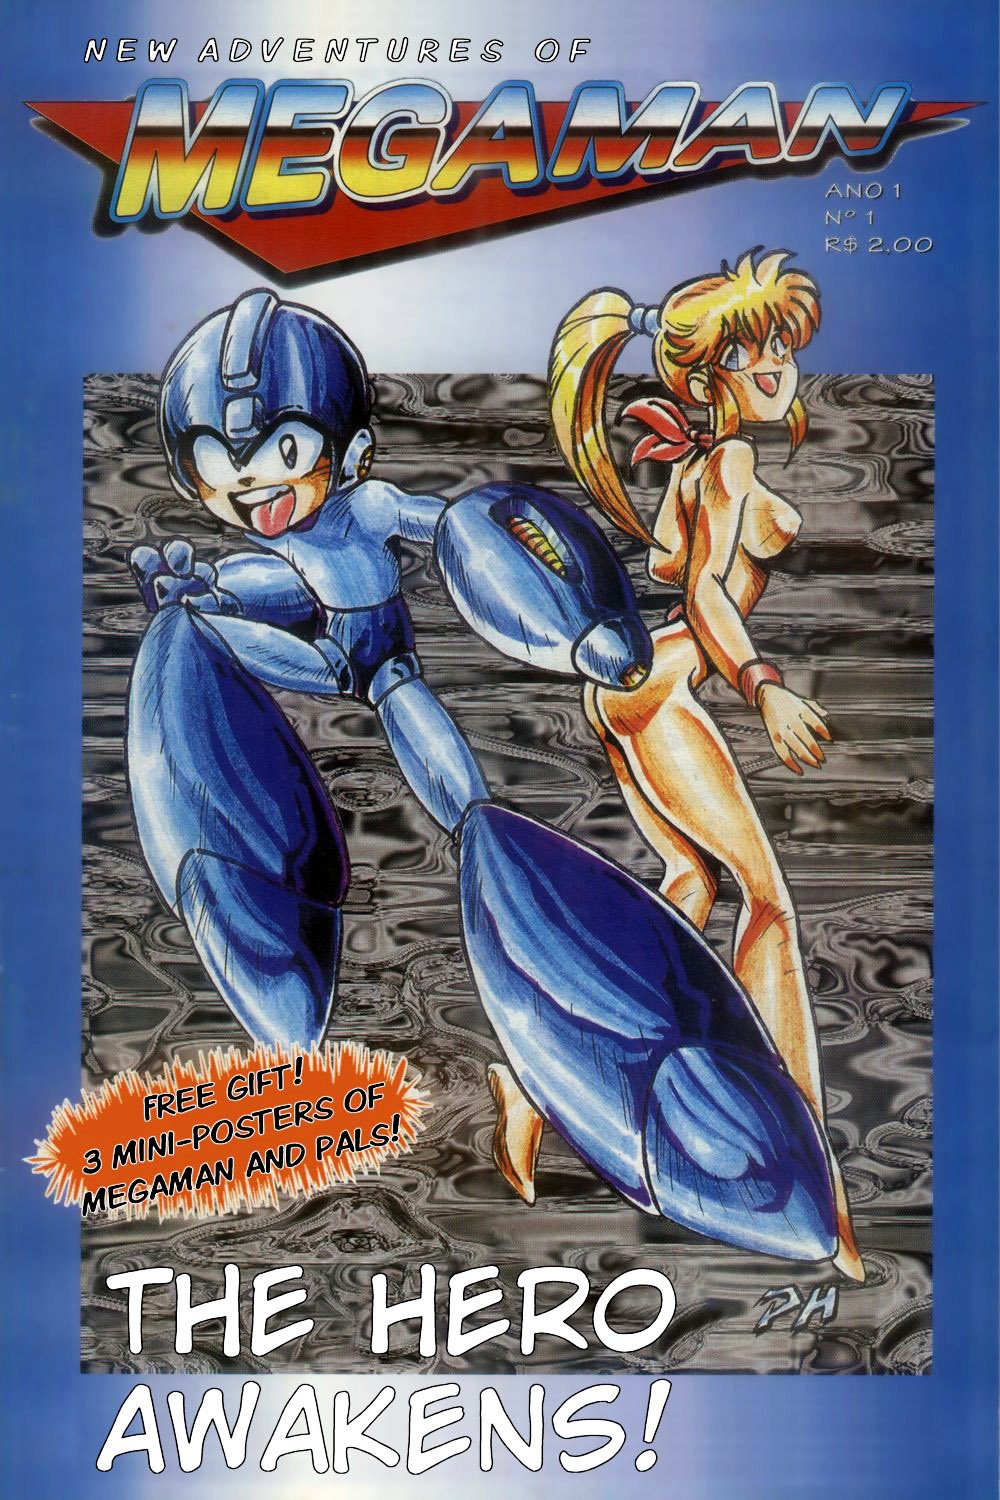 New Adventures of Mega Man Issue 01 (1996)